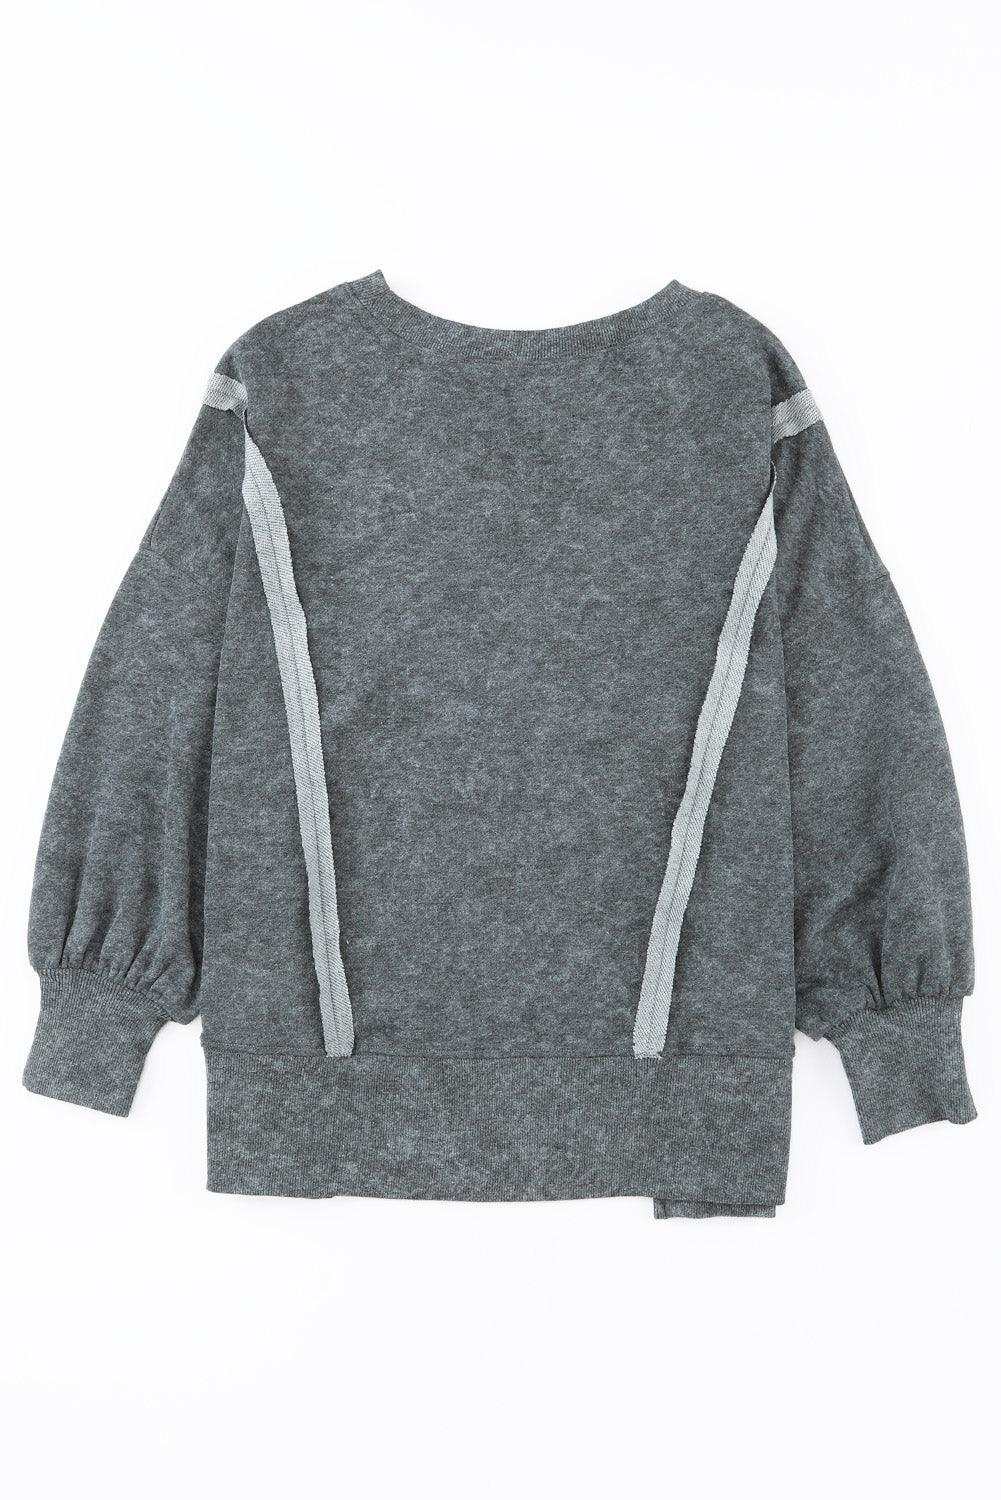 Gray Expose Seamed Washed Split Plus Size Sweatshirt - L & M Kee, LLC